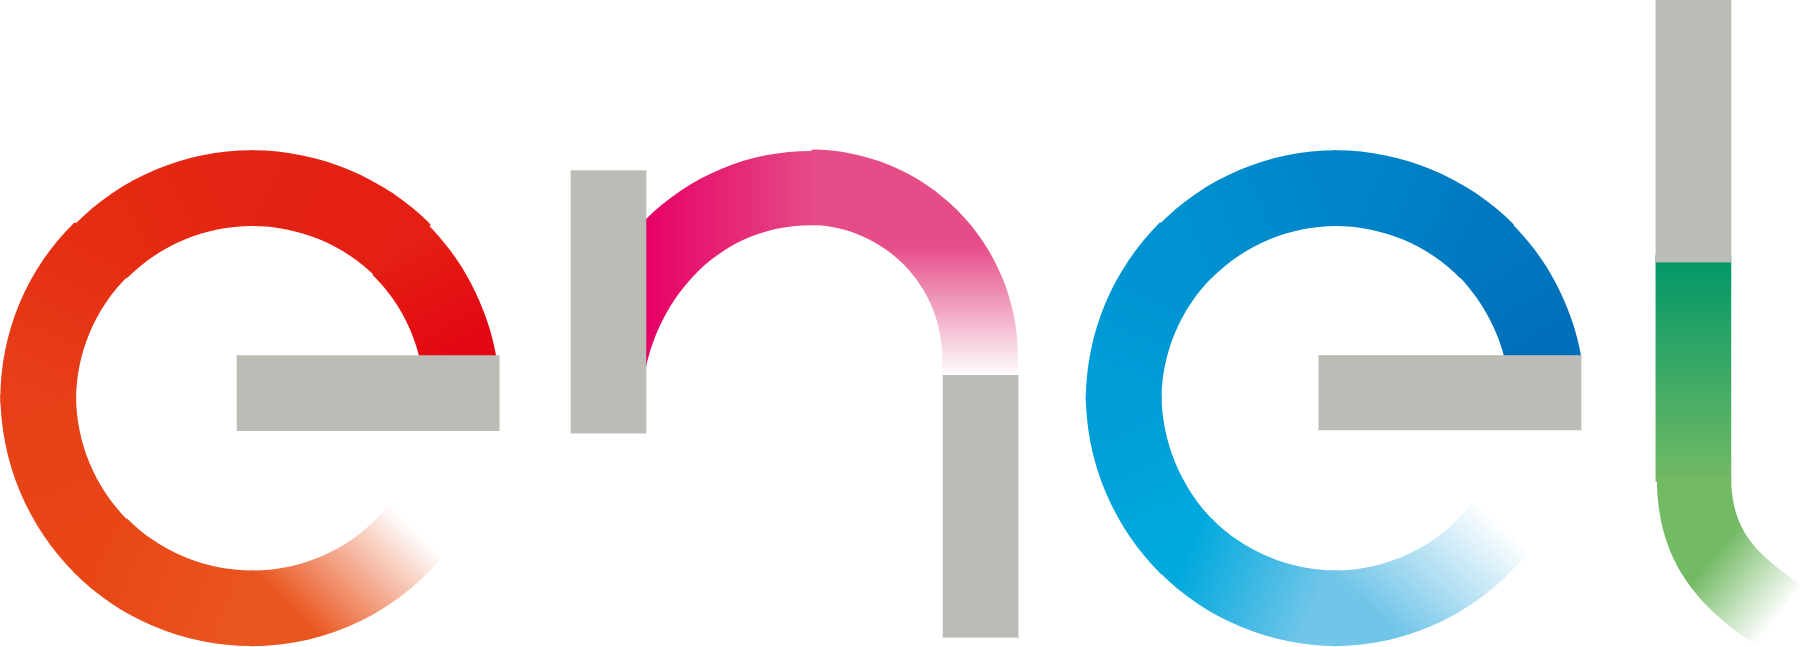 Enel Chile
 logo large (transparent PNG)